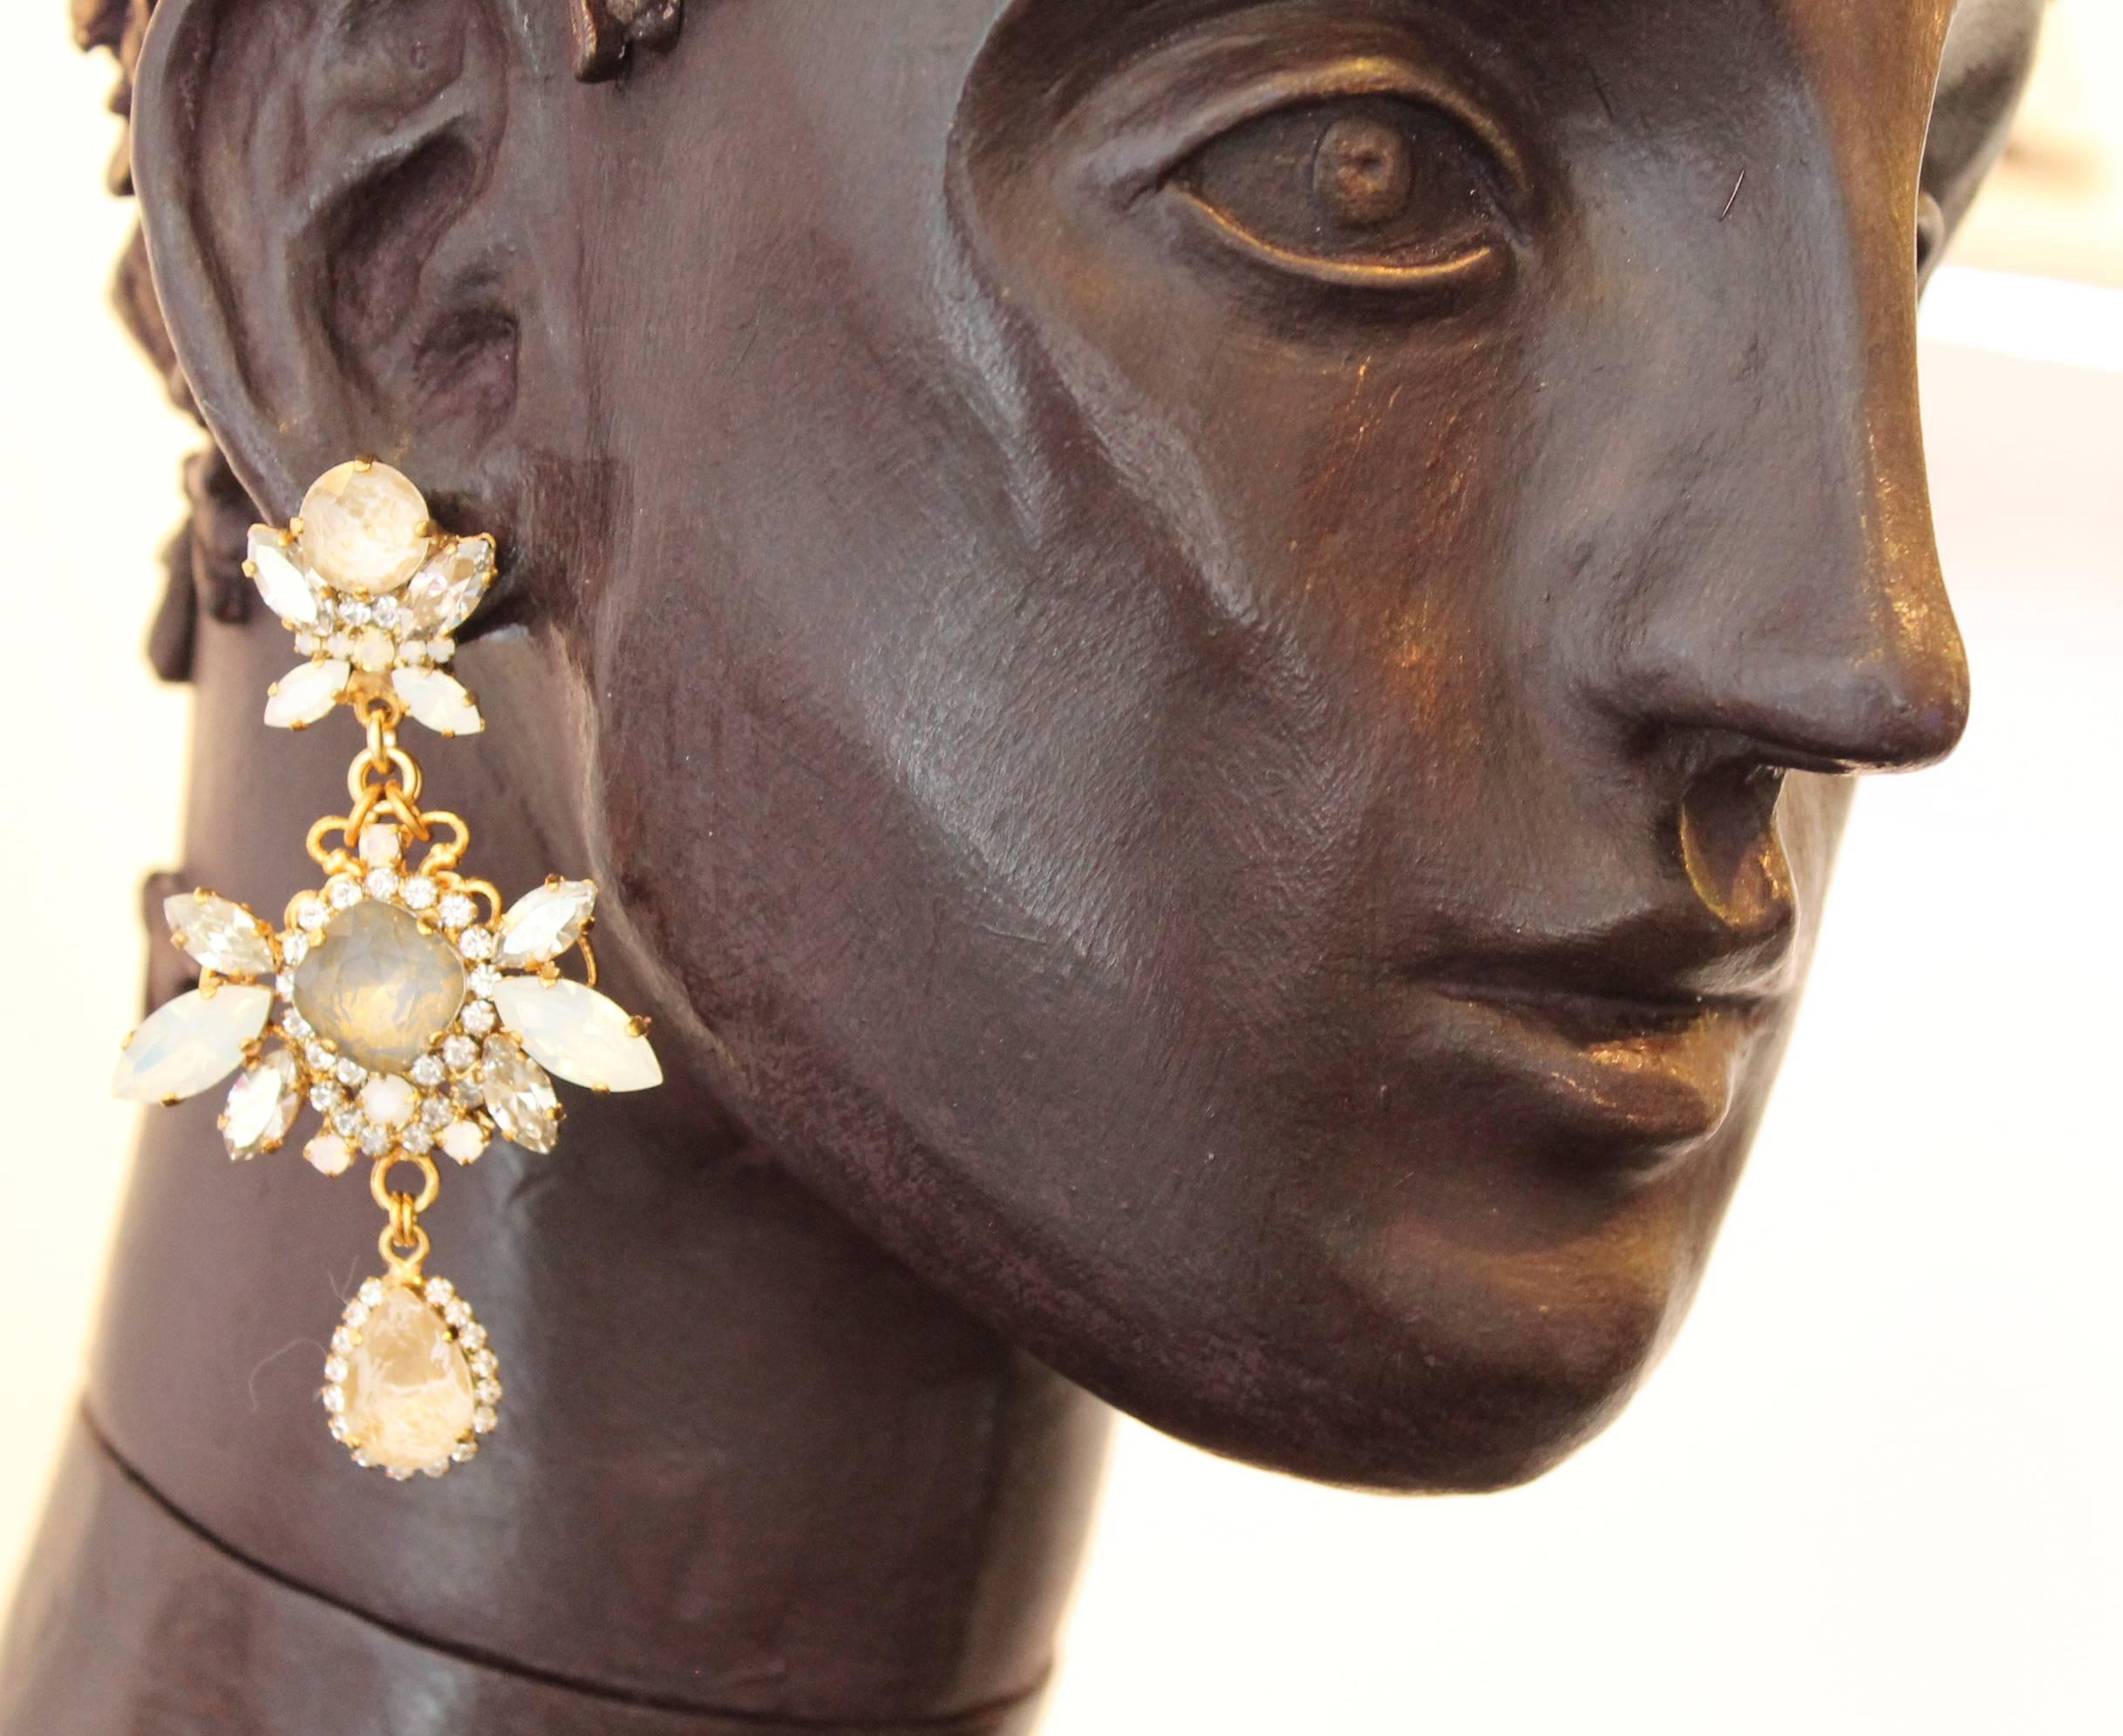 21st Centruy Modern Gold-Plated Swarovski Statement Earrings For Sale 5